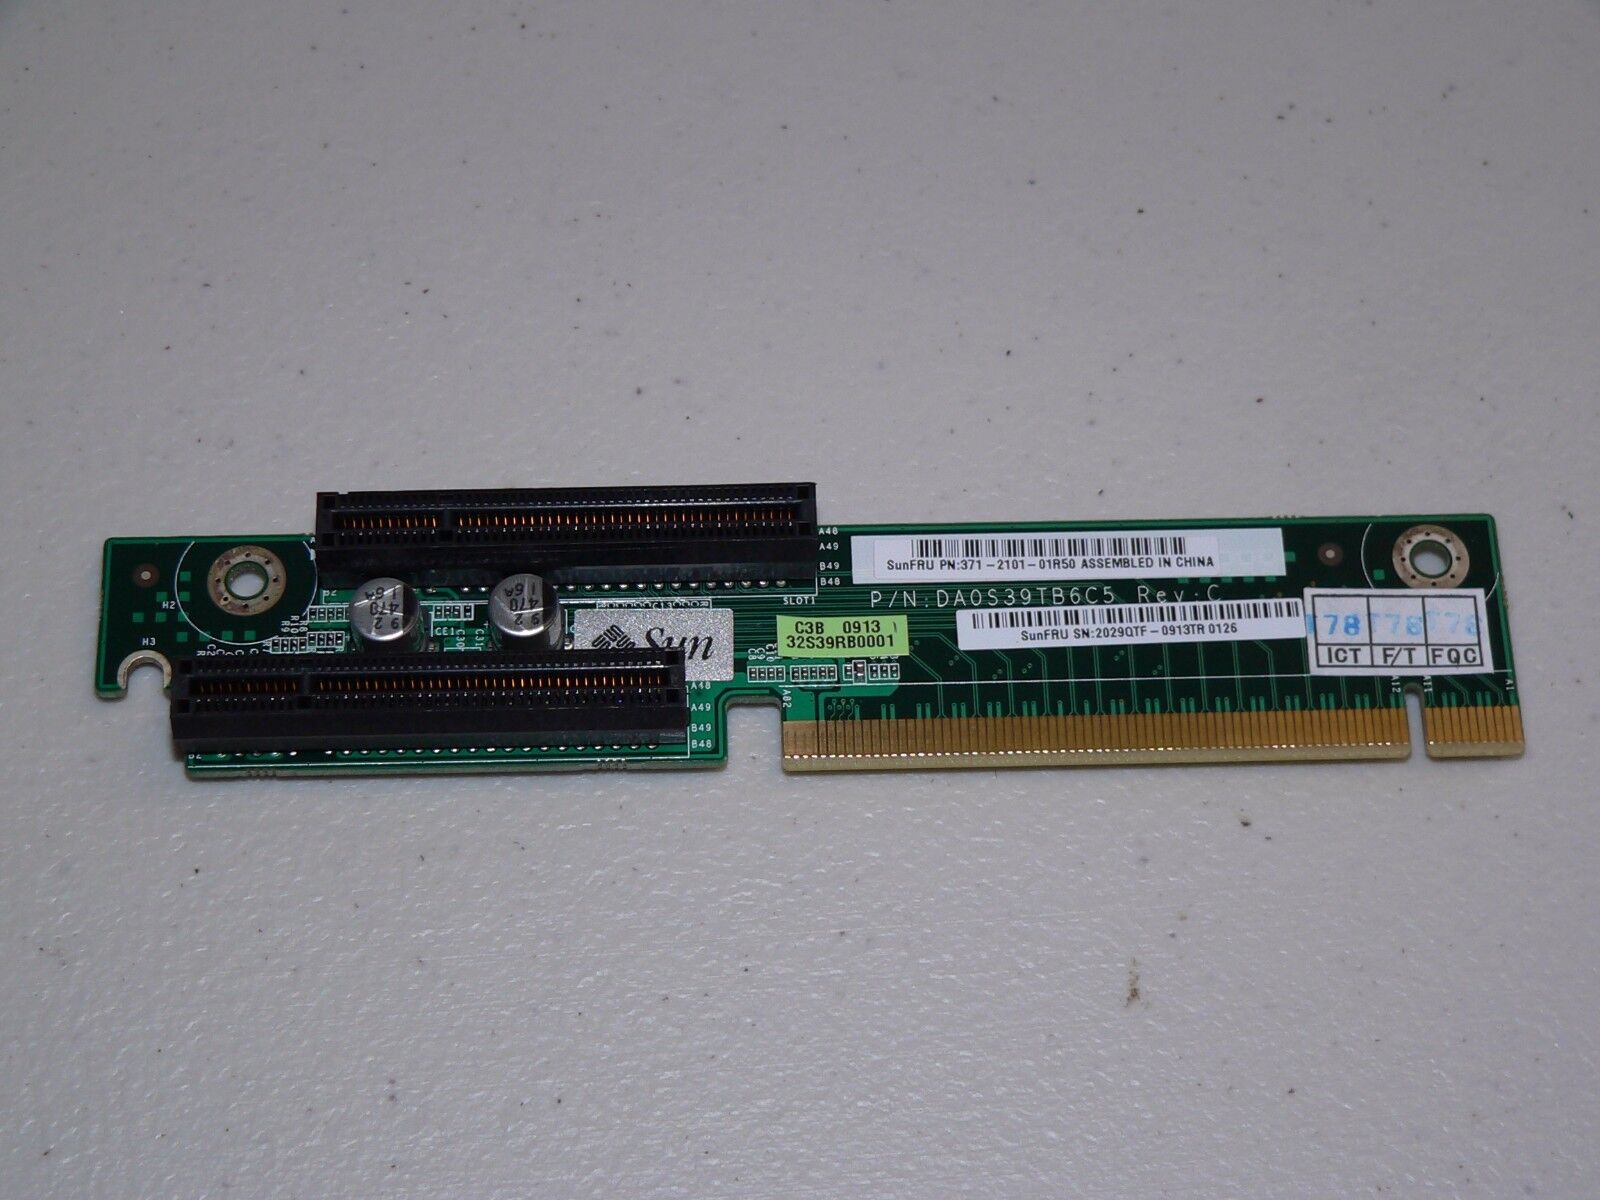 Used Sun 371-2101-01R50 Dual PCIe 8x 1U riser card for SunFire X2100/2200